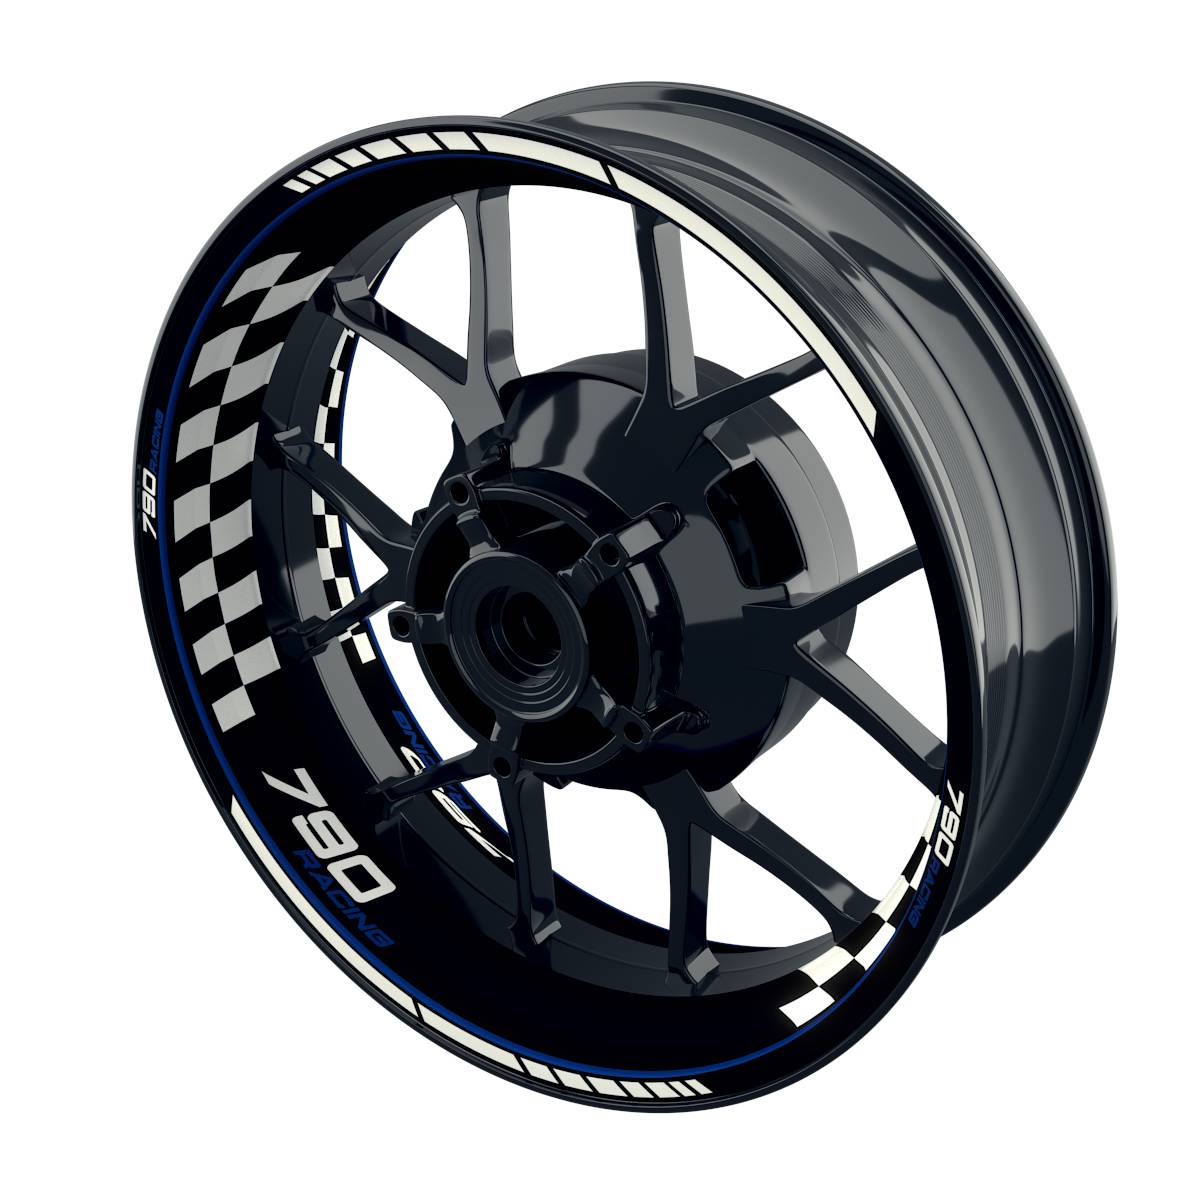 790 Racing Rim Decals Grid Wheelsticker Premium